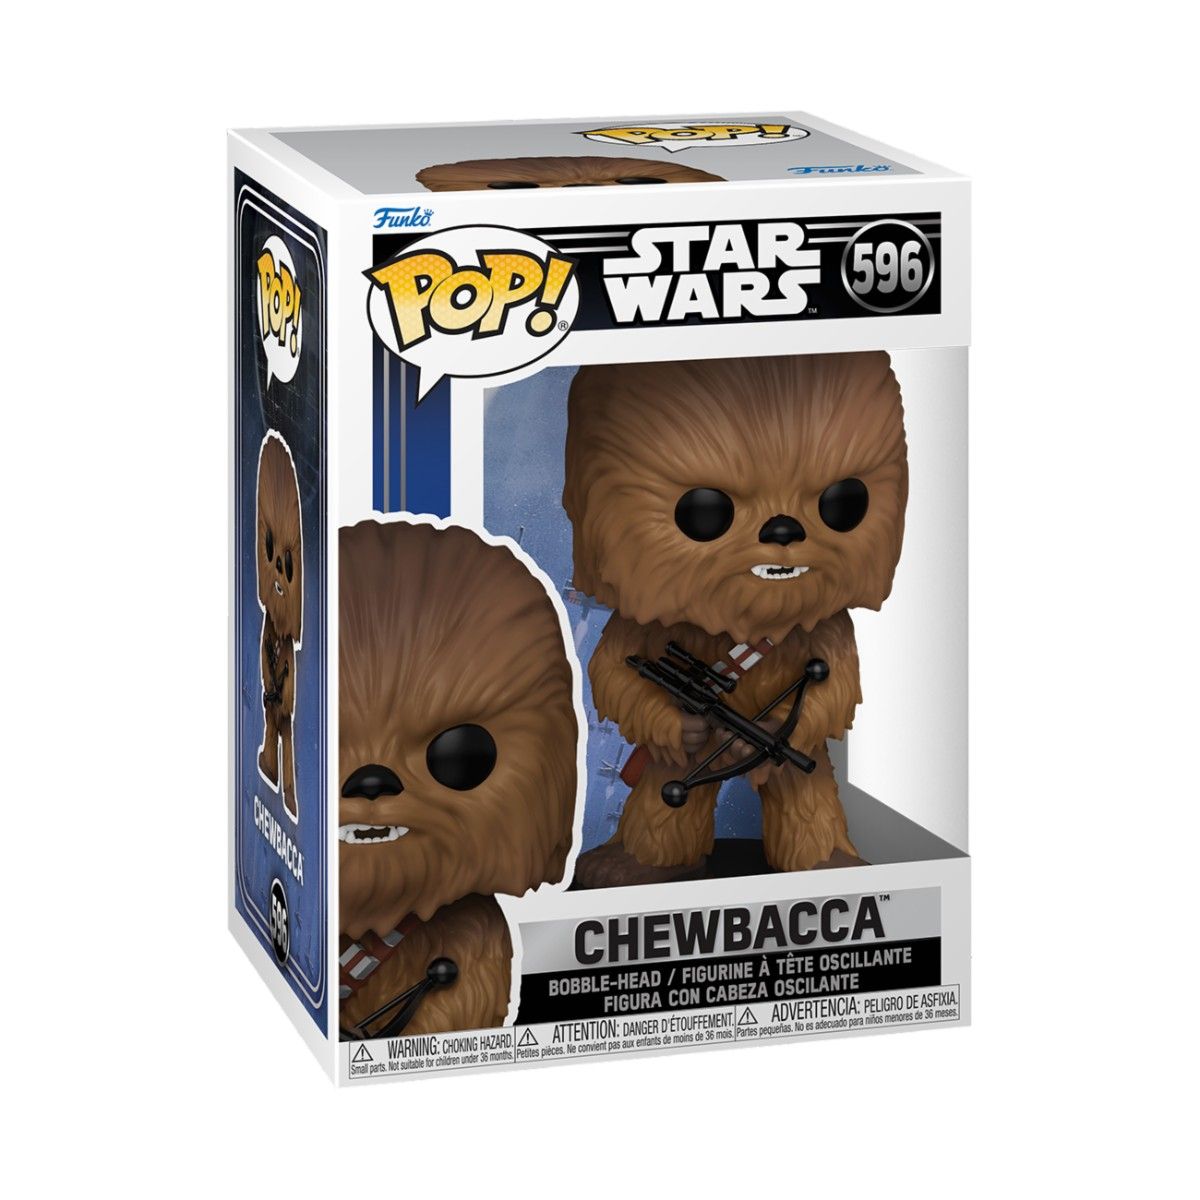 Chewbacca (596) - Star Wars - Funko Pop